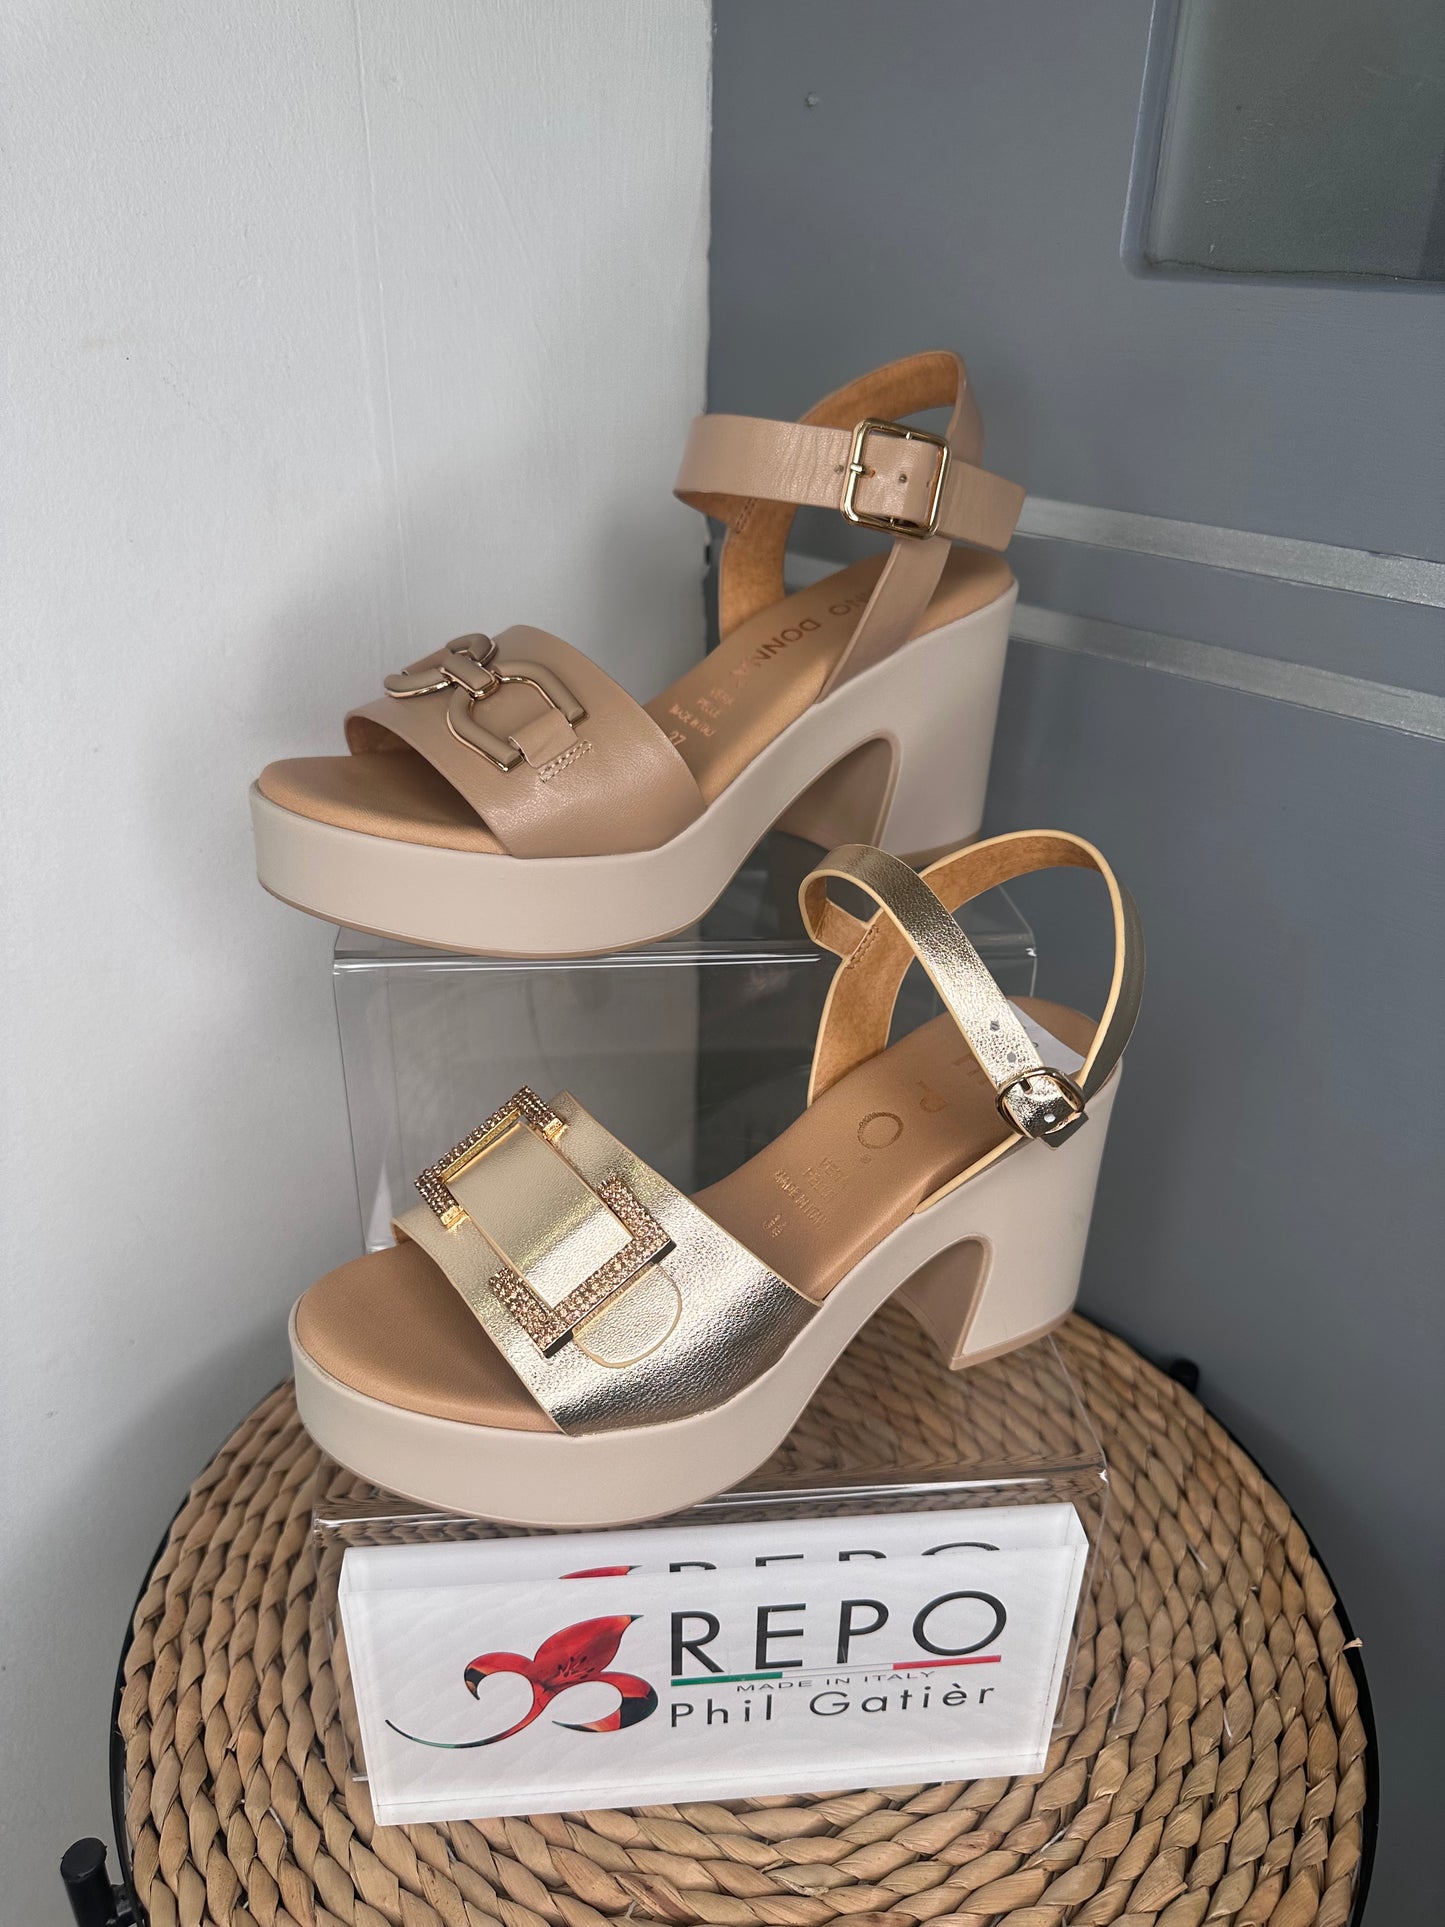 Repo - Beige Sandal With Block Heel & Platform Sole